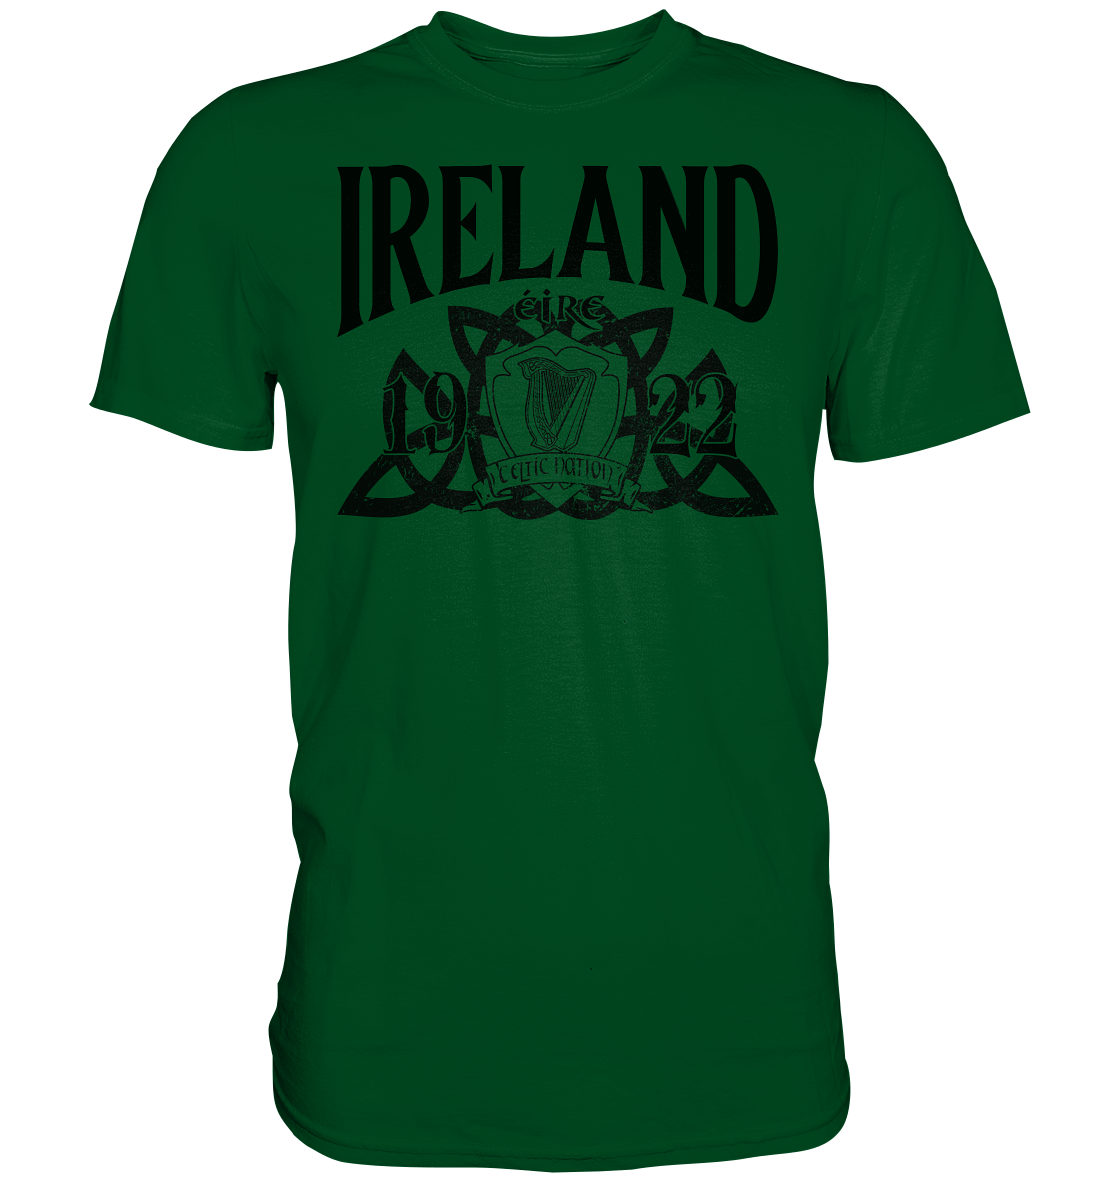 Ireland "Éire 1922" - Premium Shirt